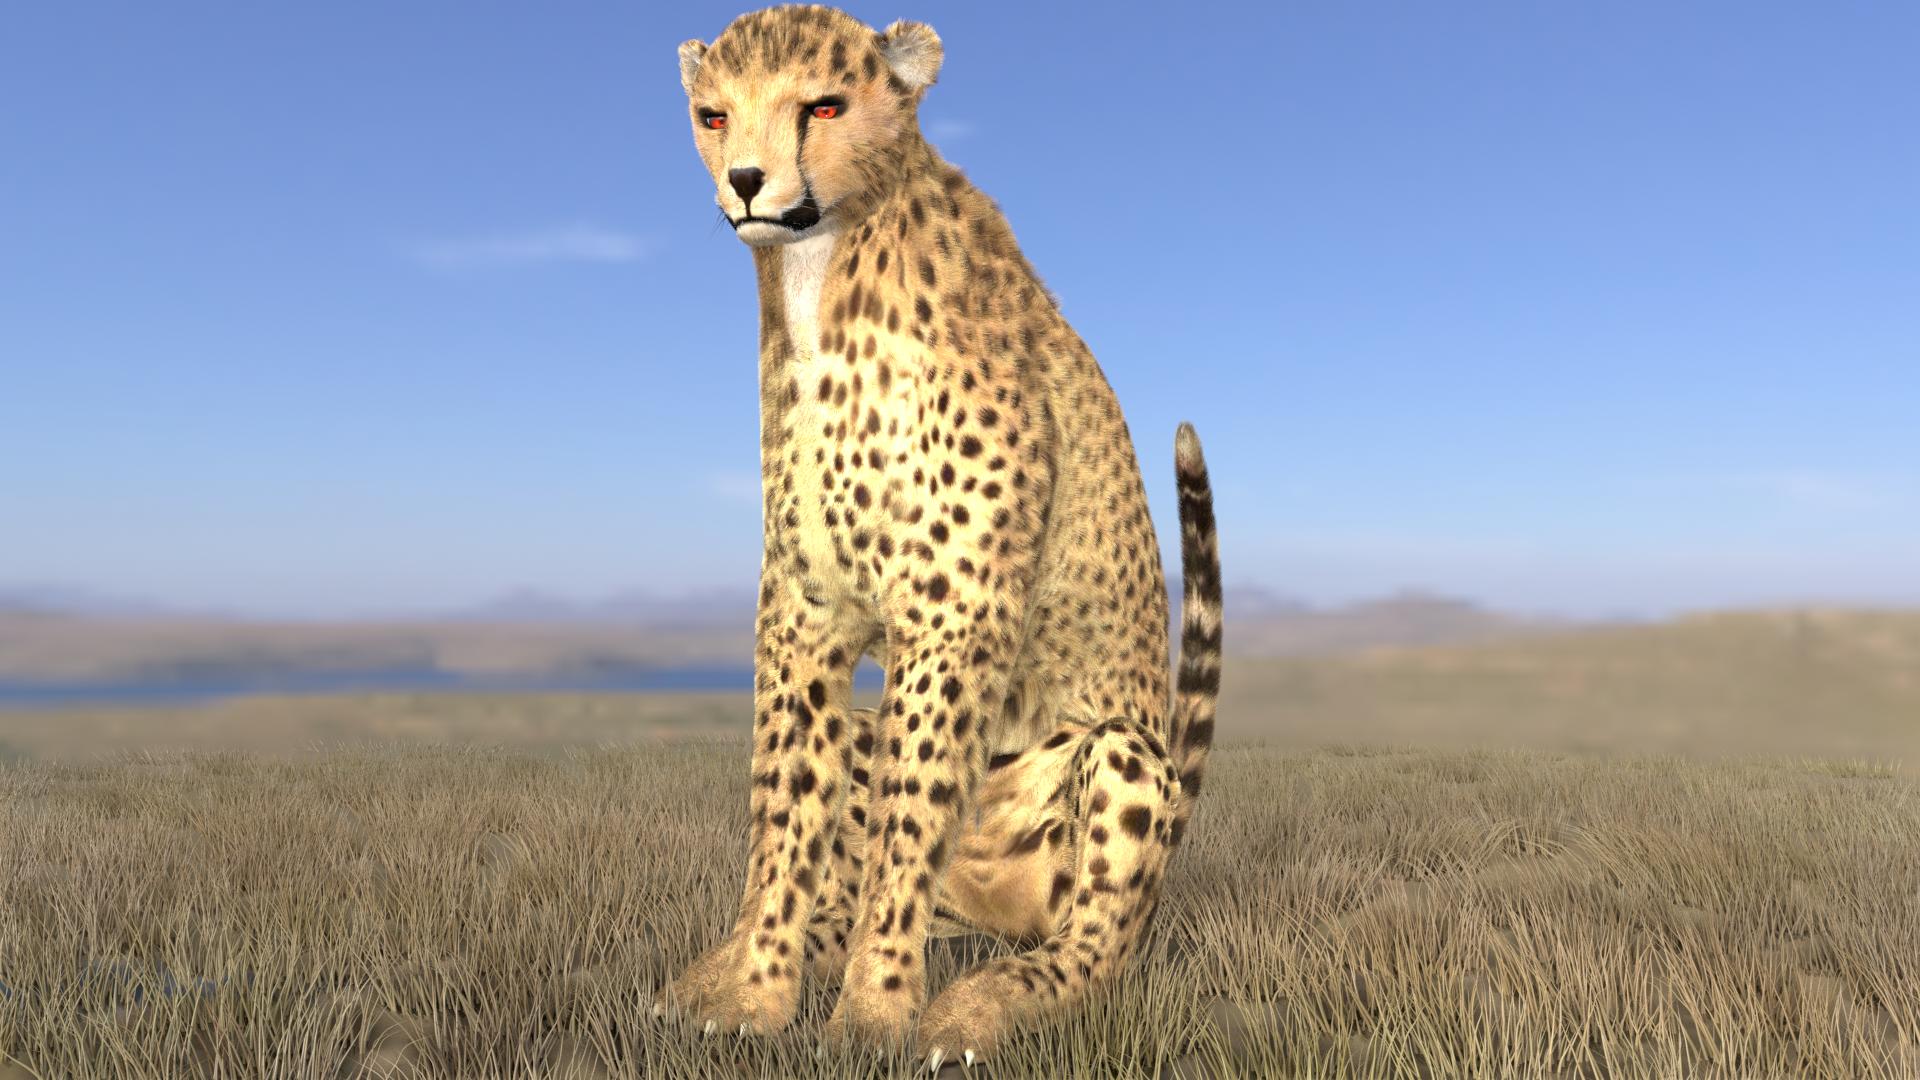 Cheetah preview image 3